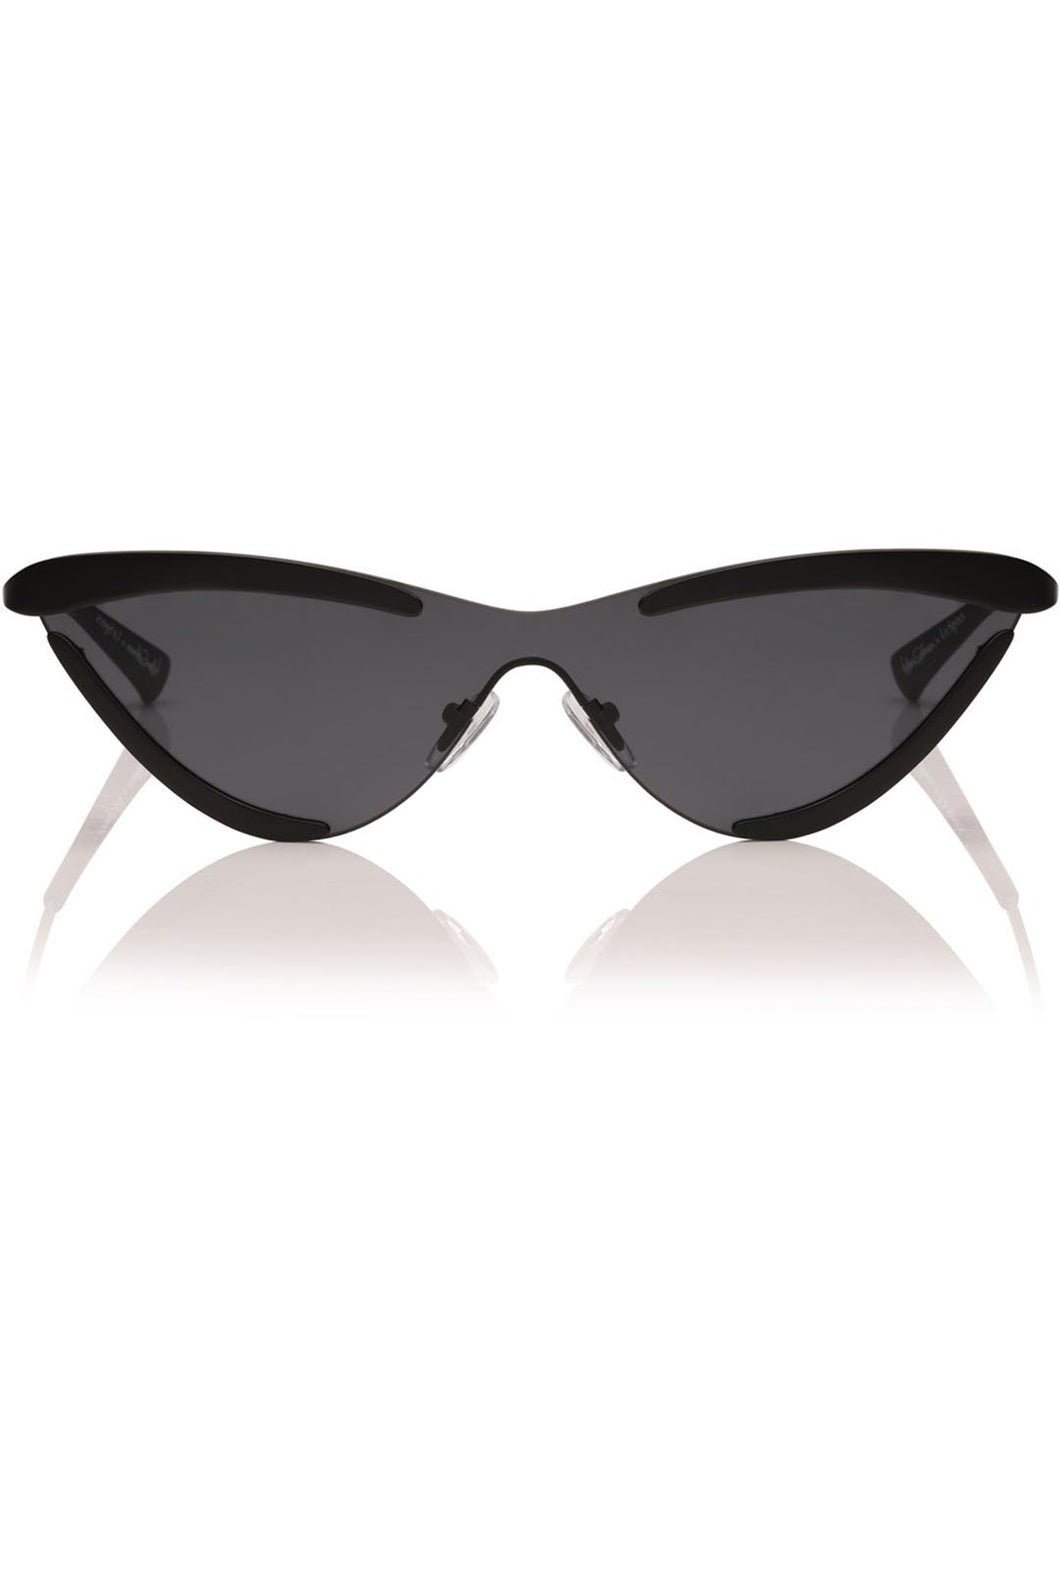 Le Specs - The Scandal sunglasses - Satin Black